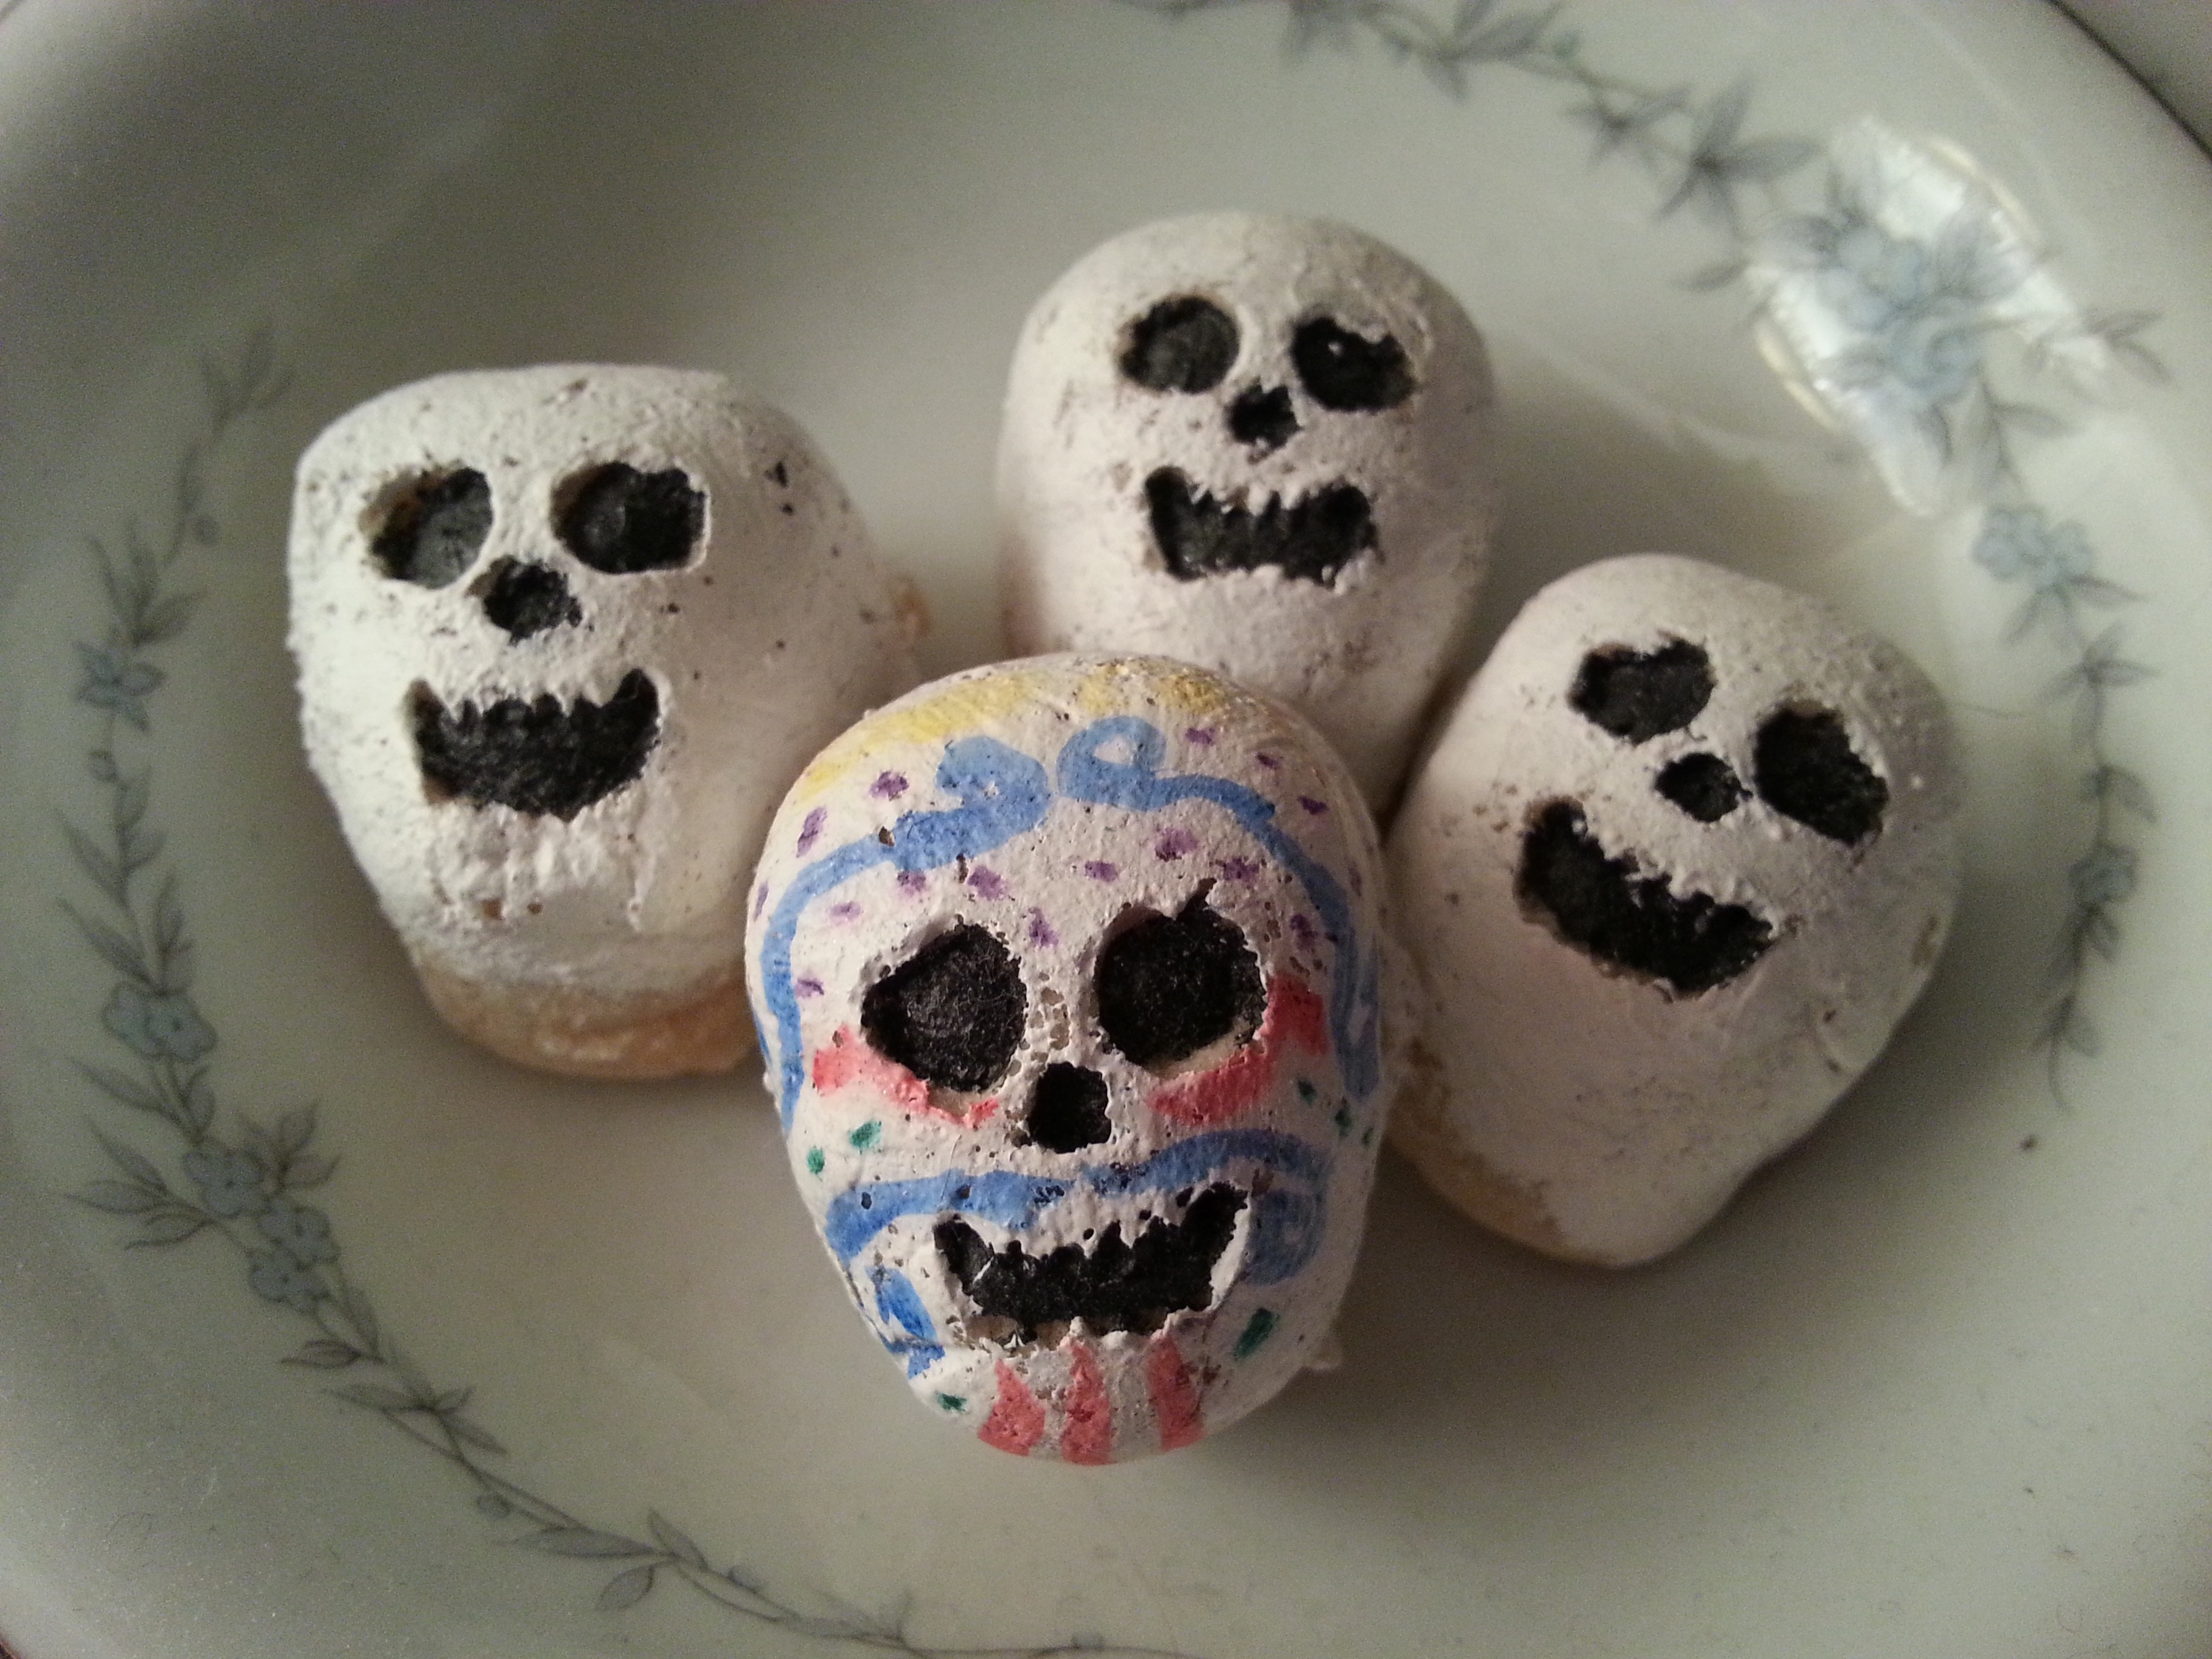 4 skull pastries